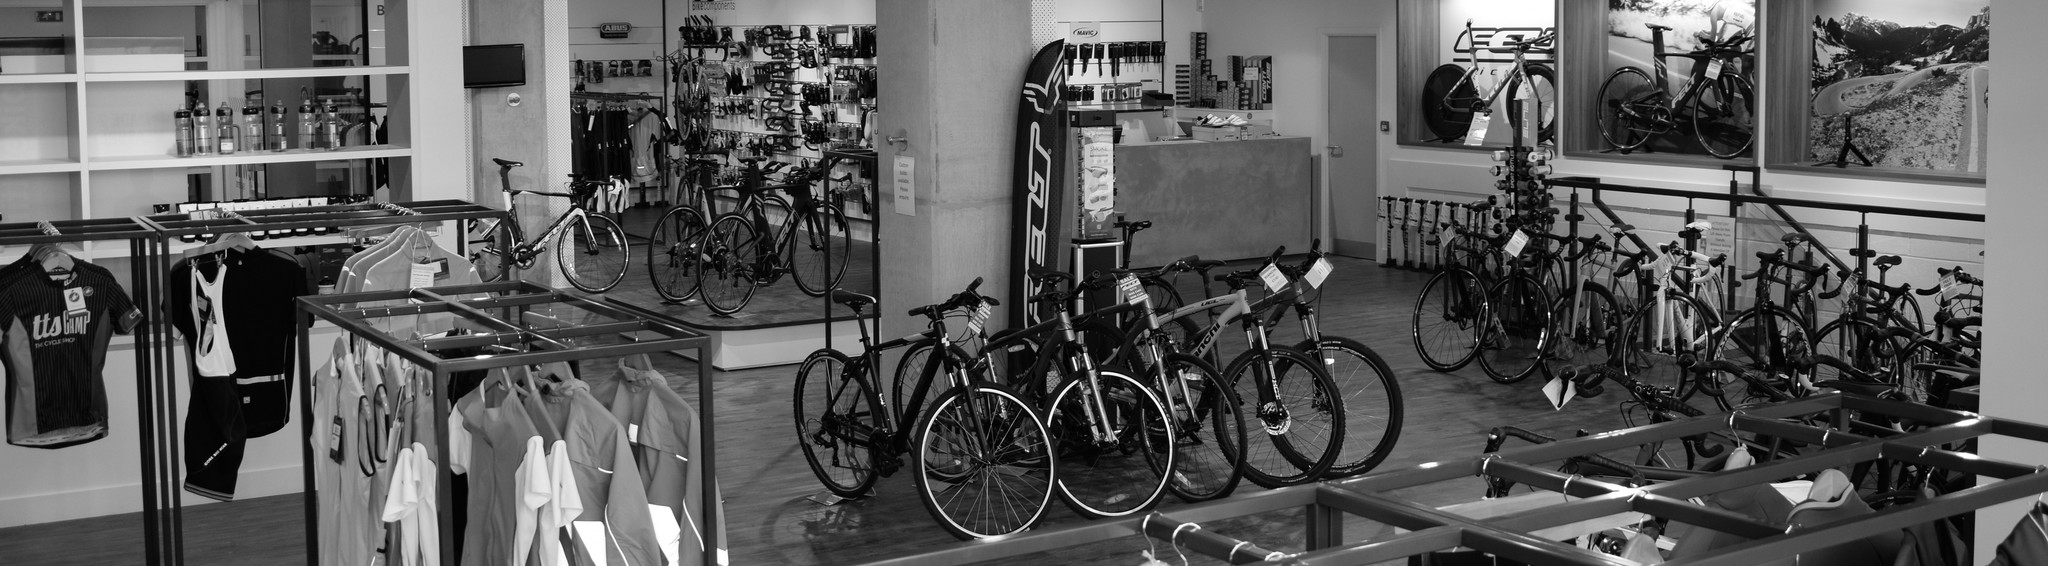 bike shop bristol - The Triathlon Shop